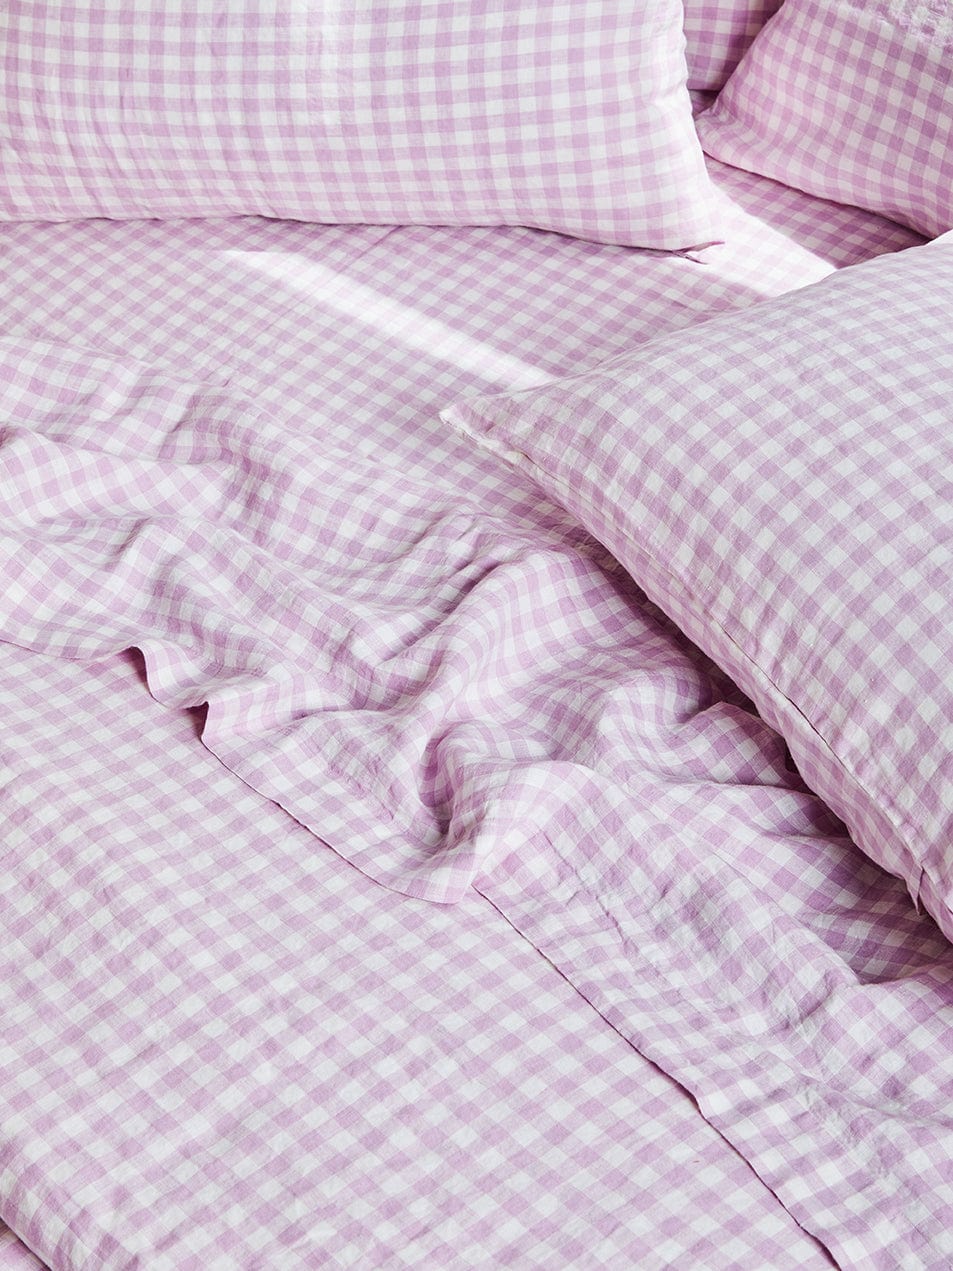 Lilac Gingham – Linen Pillowcase Set